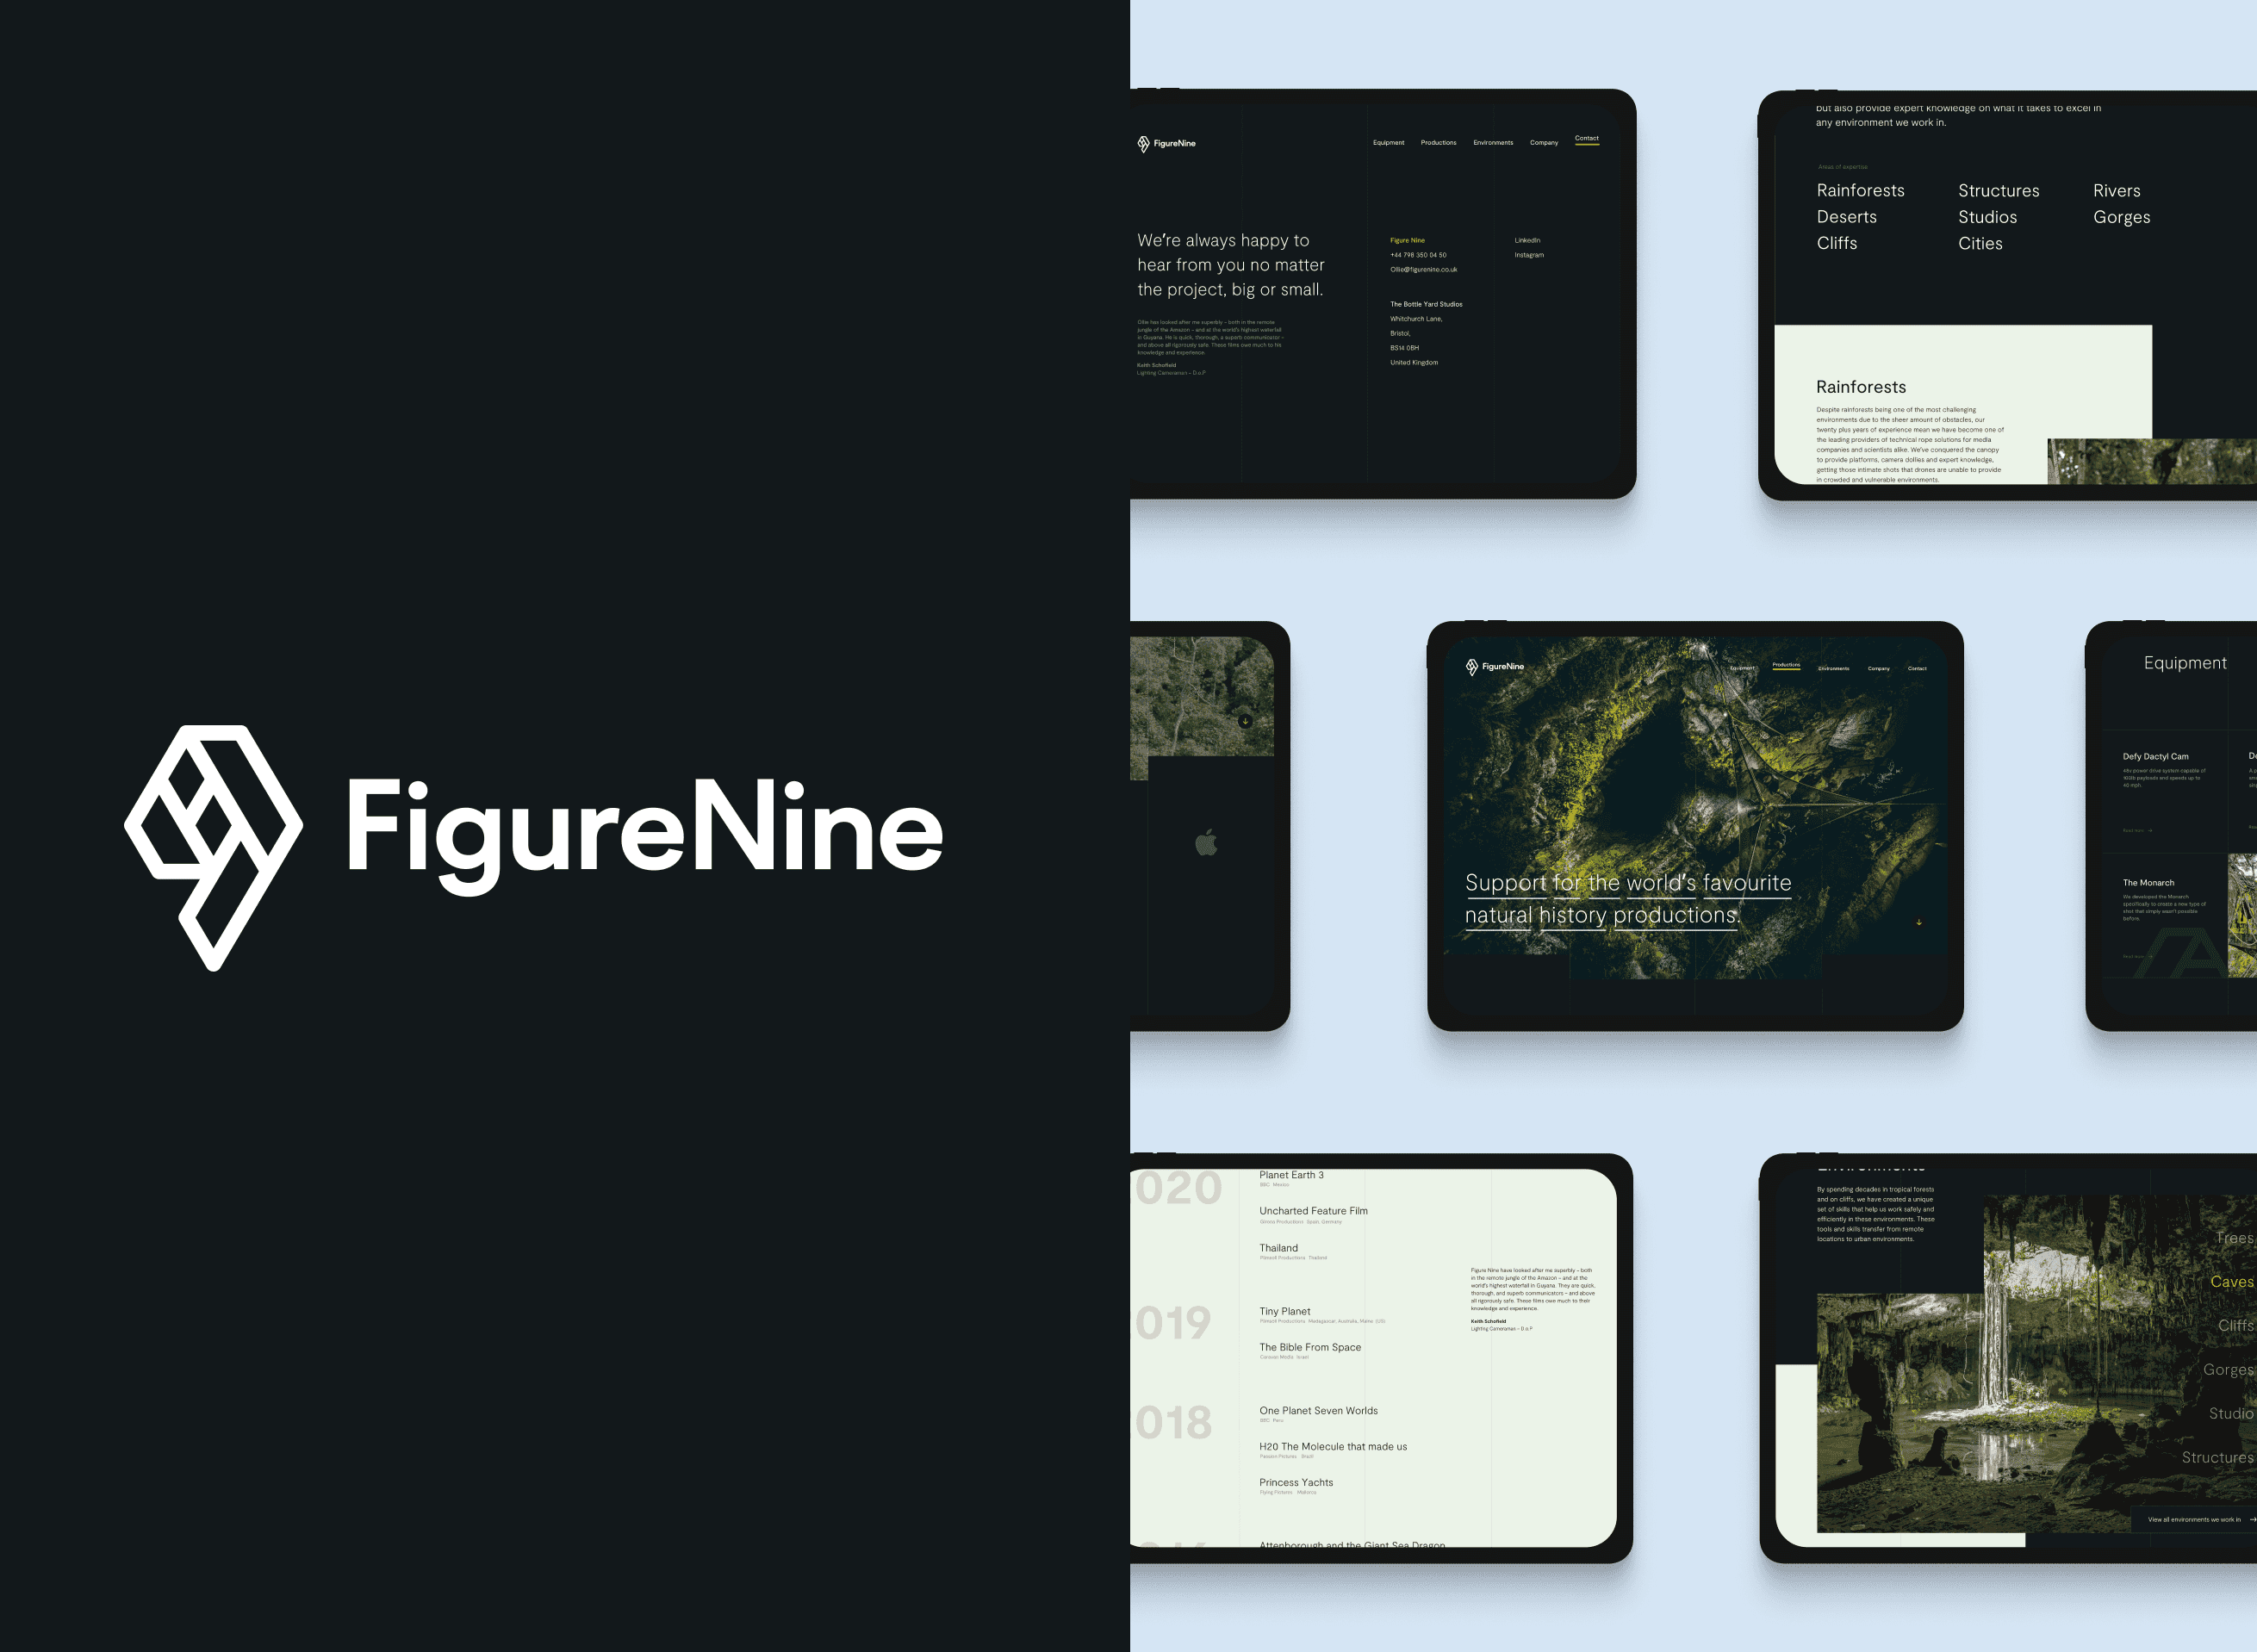 Figure Nine logo and website.